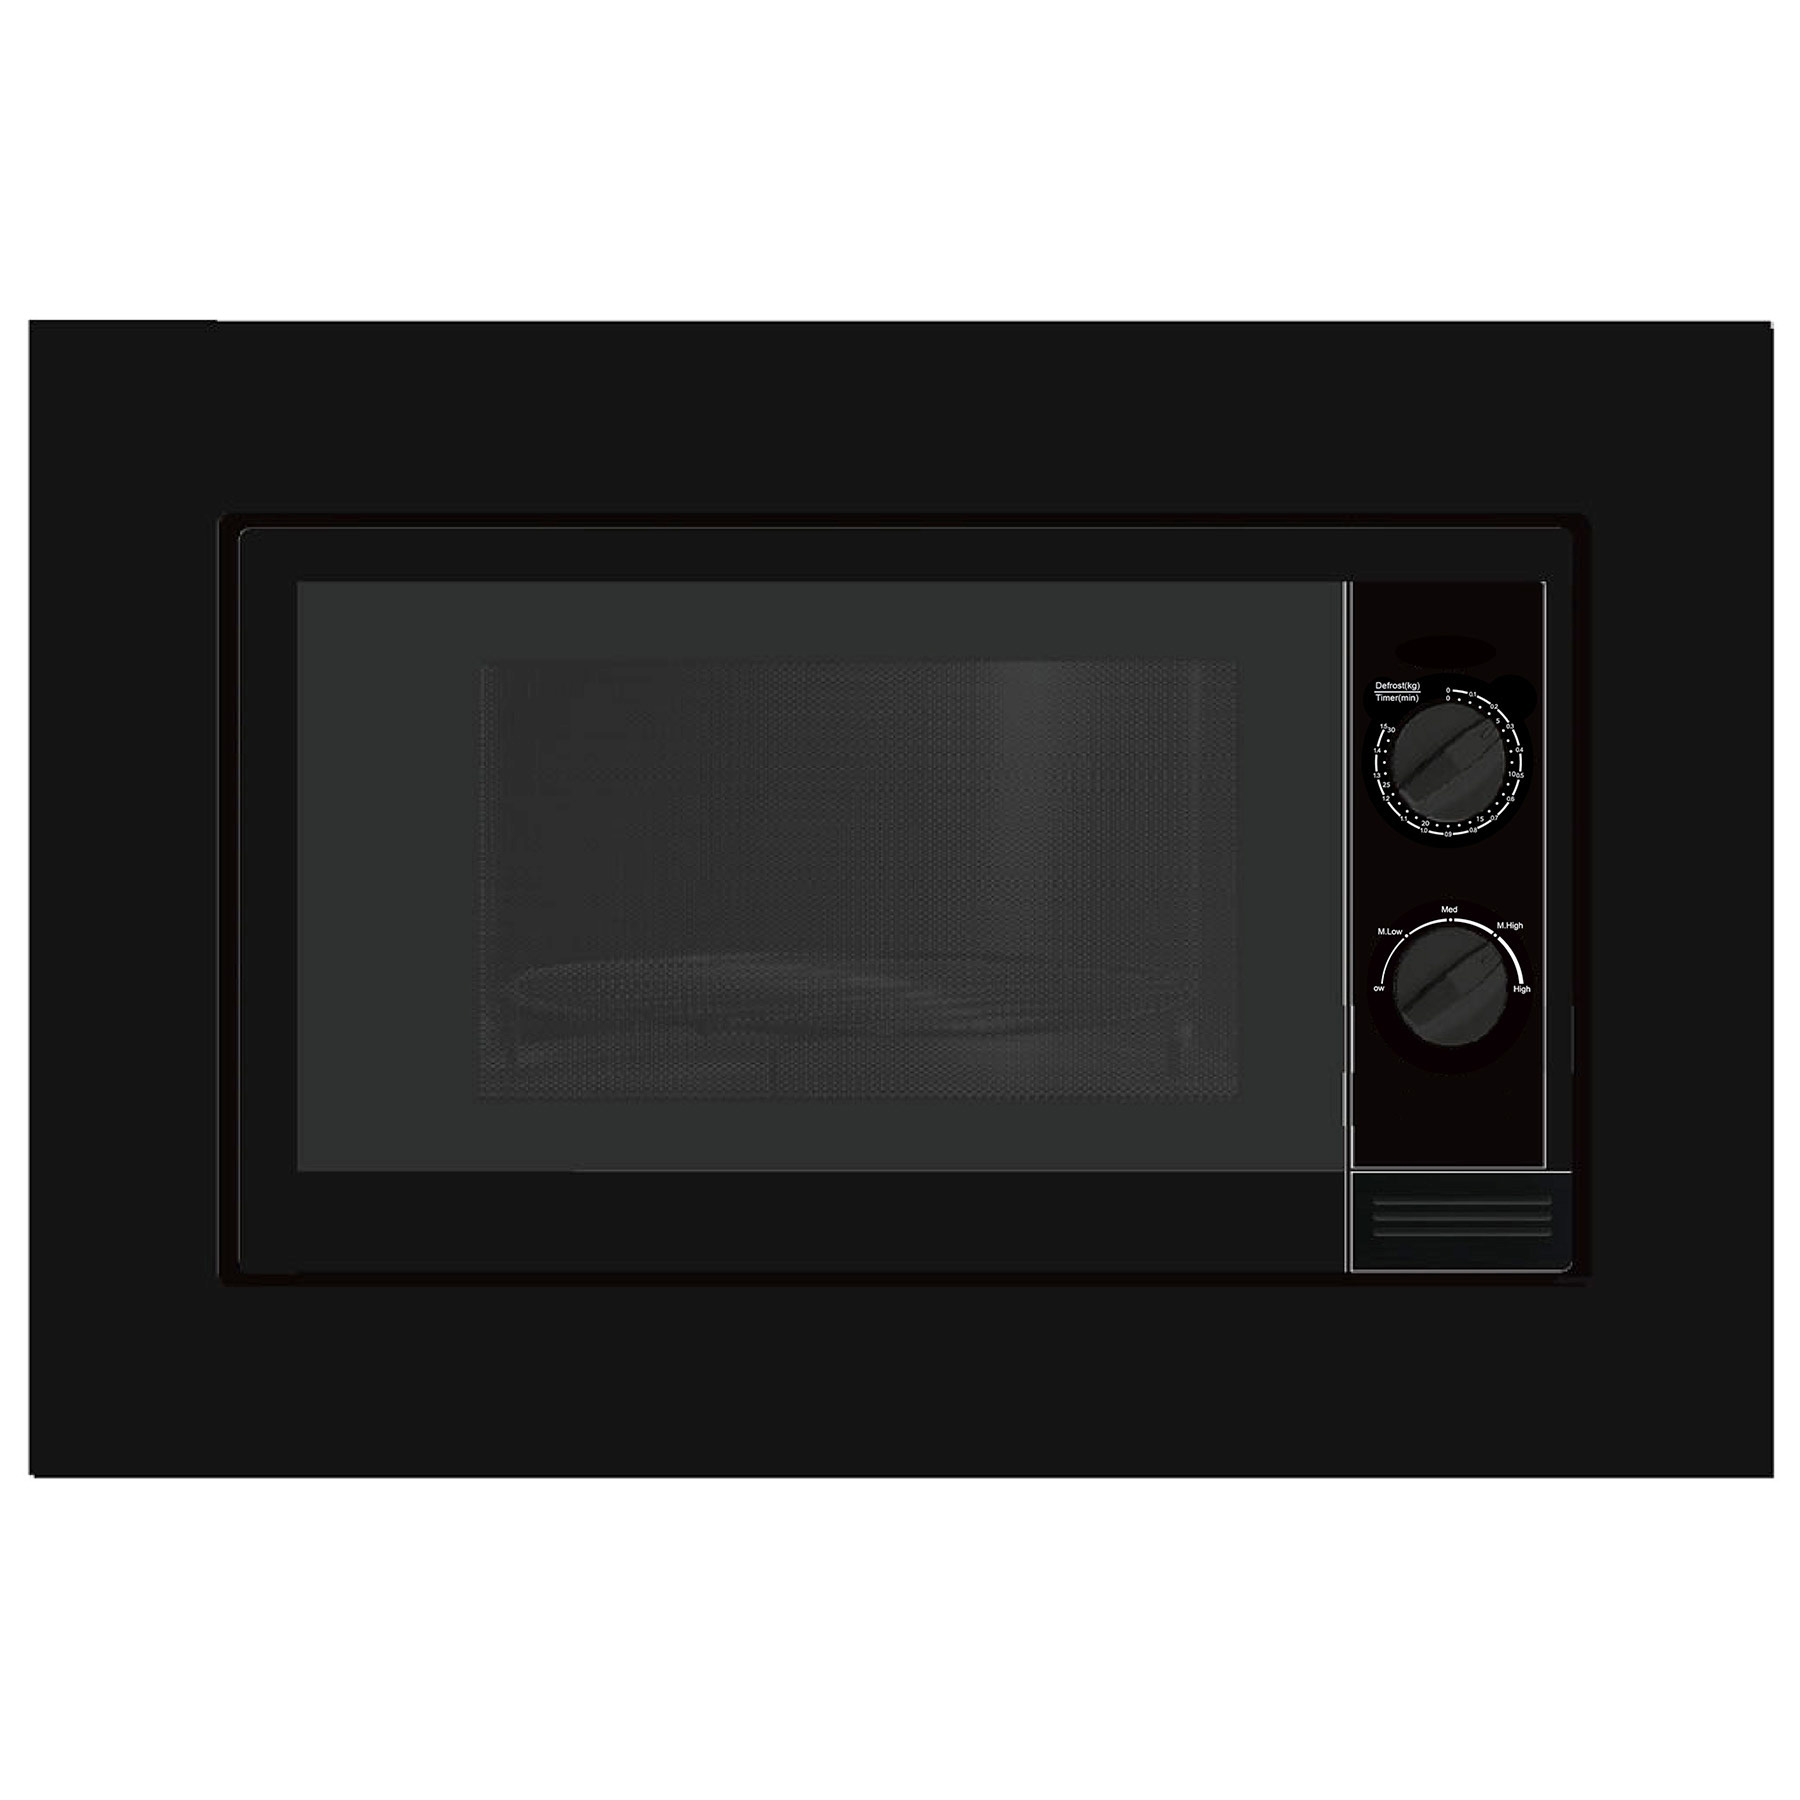 Image of Culina UBMICRO20BK Built In Slim Depth Microwave Oven in Black 700W 20